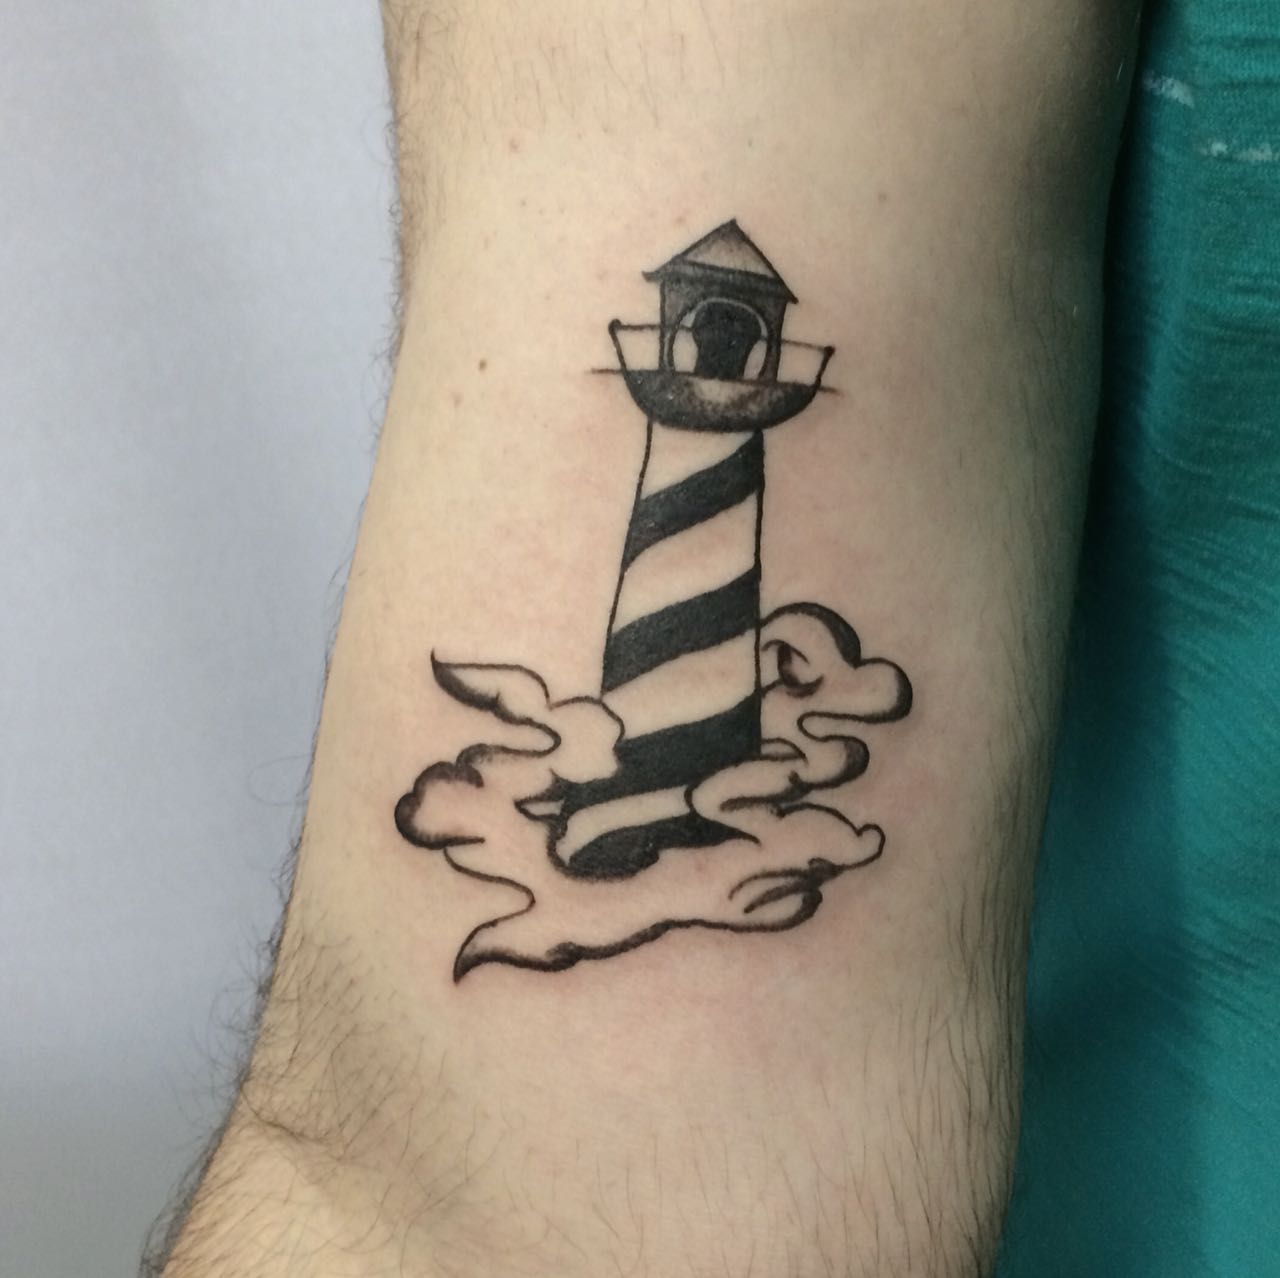 Cape lookout lighthouse tattoo  Lighthouse tattoo Tattoos Calf tattoo